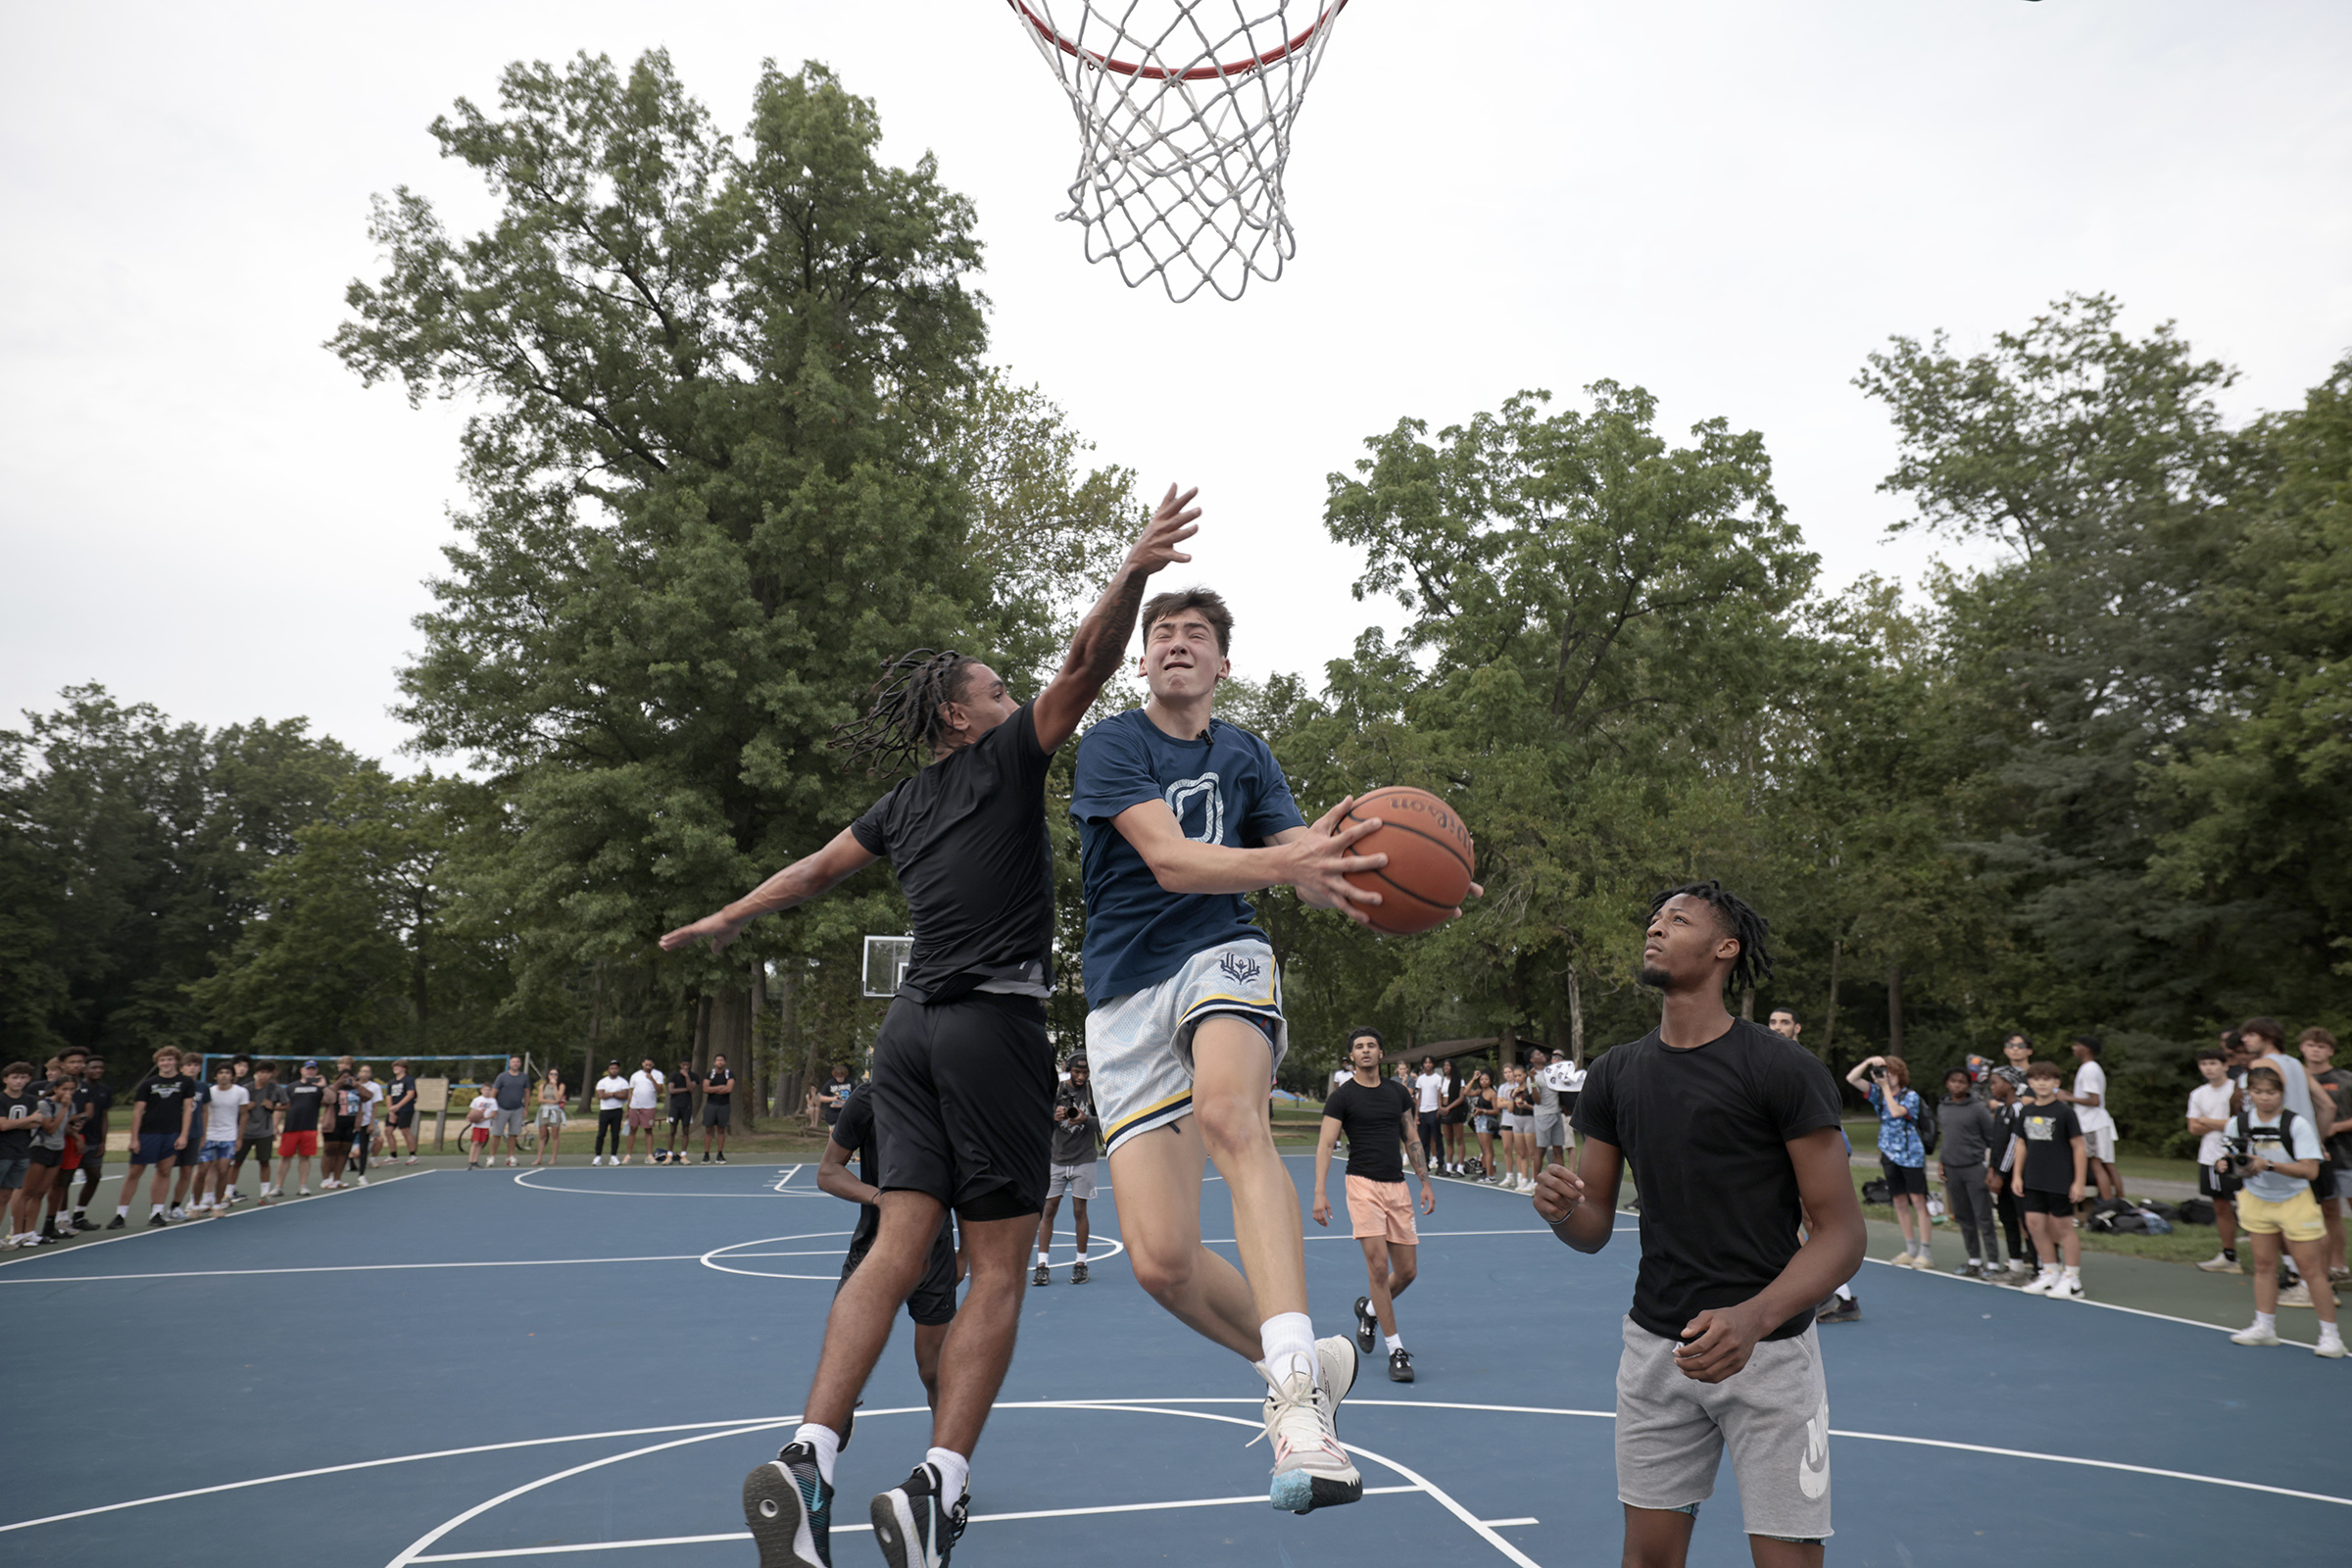 TikTok star Jake West shows heart at playground basketball event